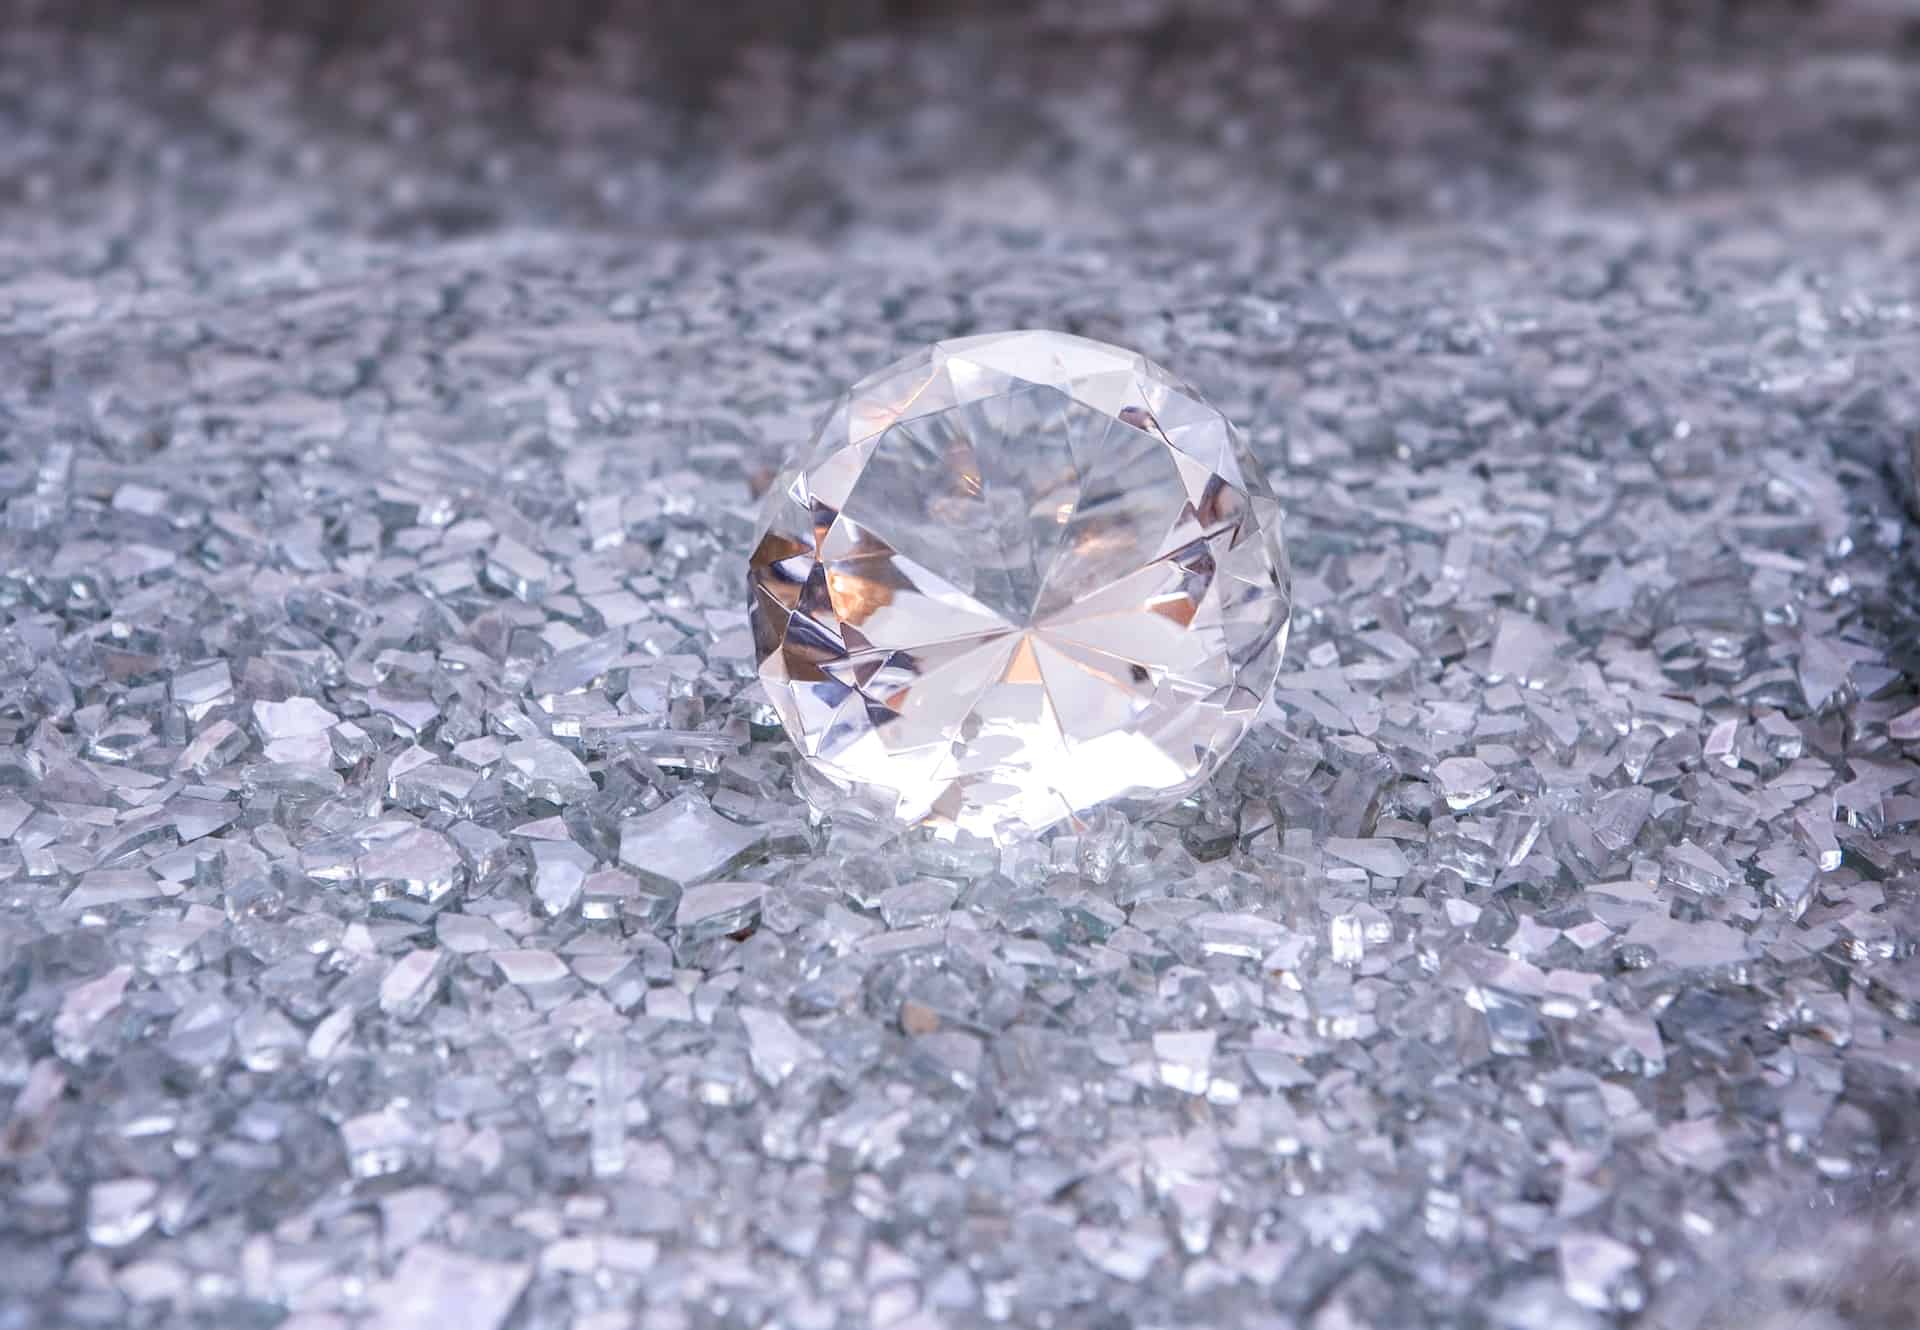 a large diamond with shards of small diamonds